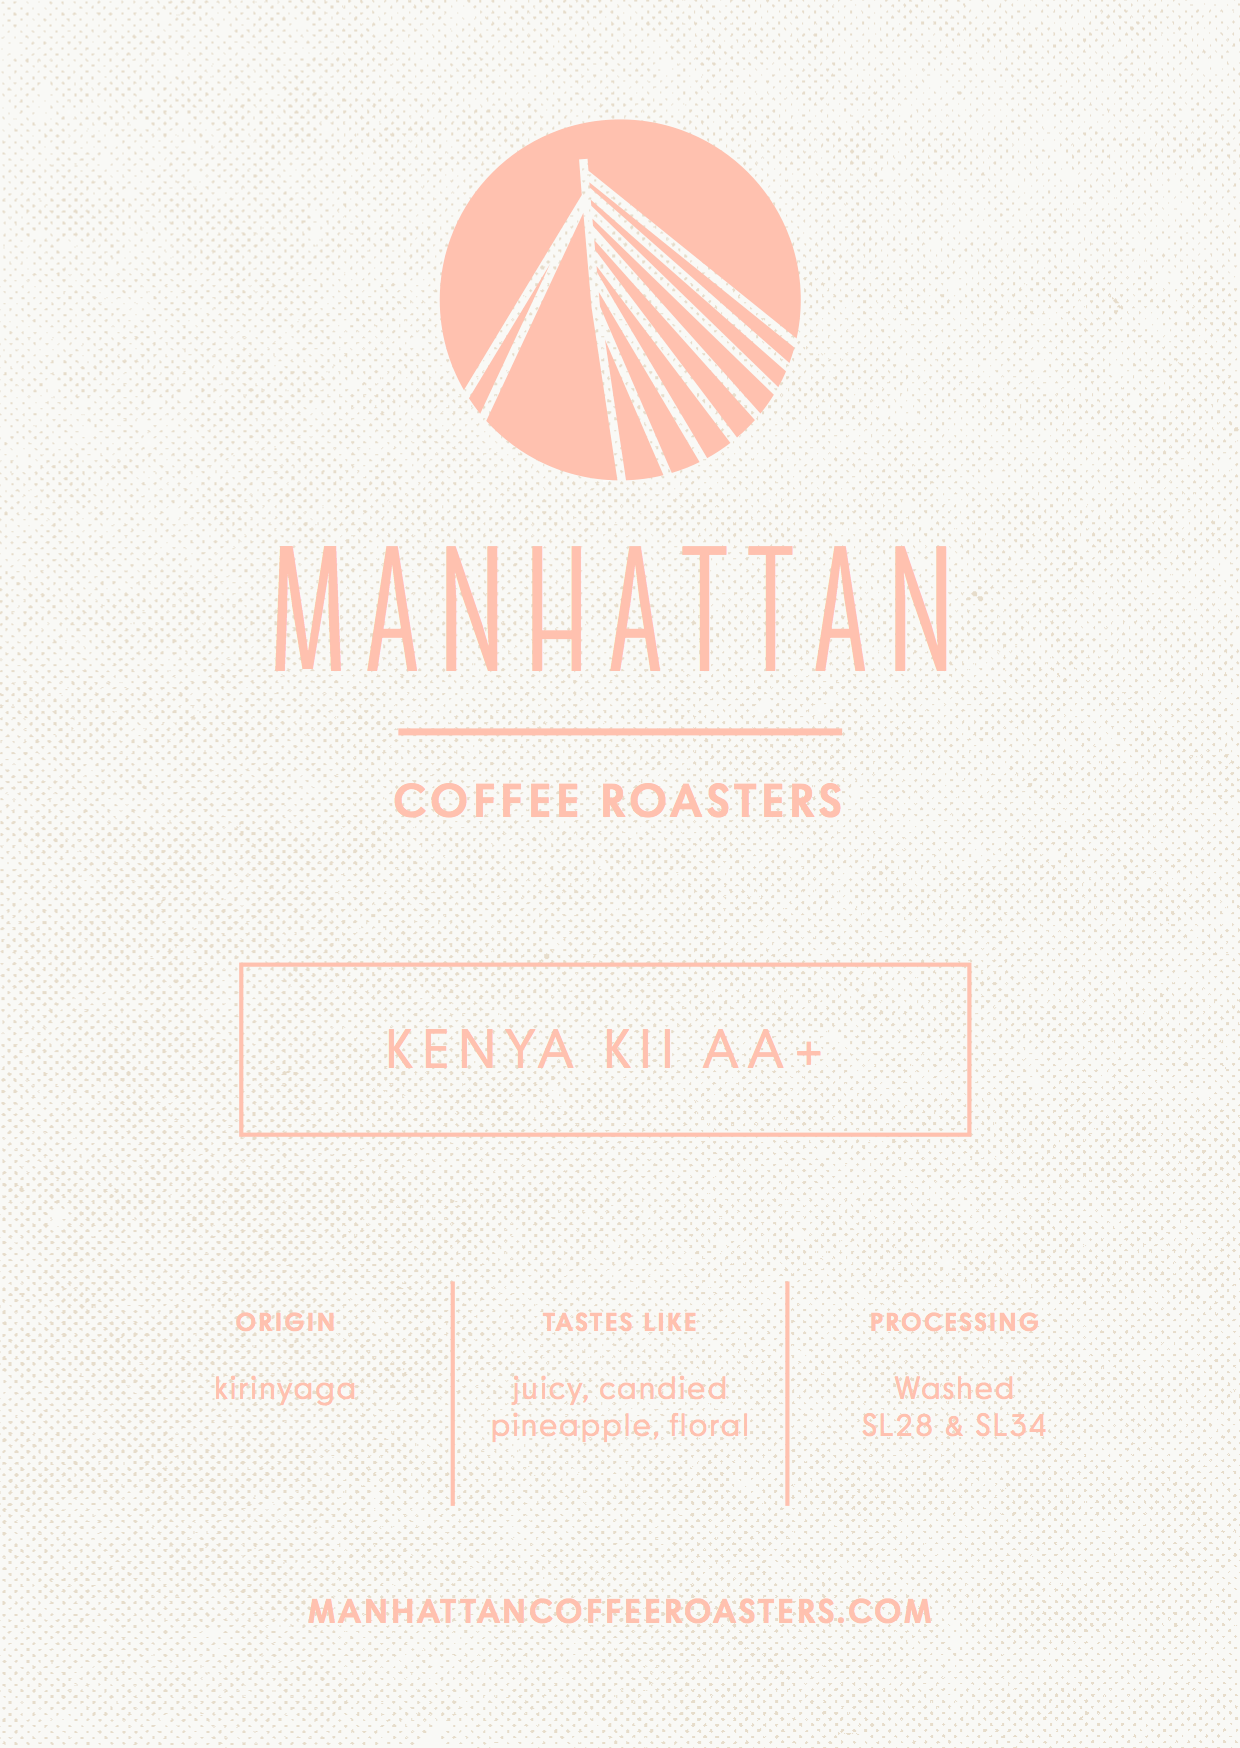 June 2017 — Kirinyaga “Kii” Kenyan AA+, from Manhattan Coffee Roasters